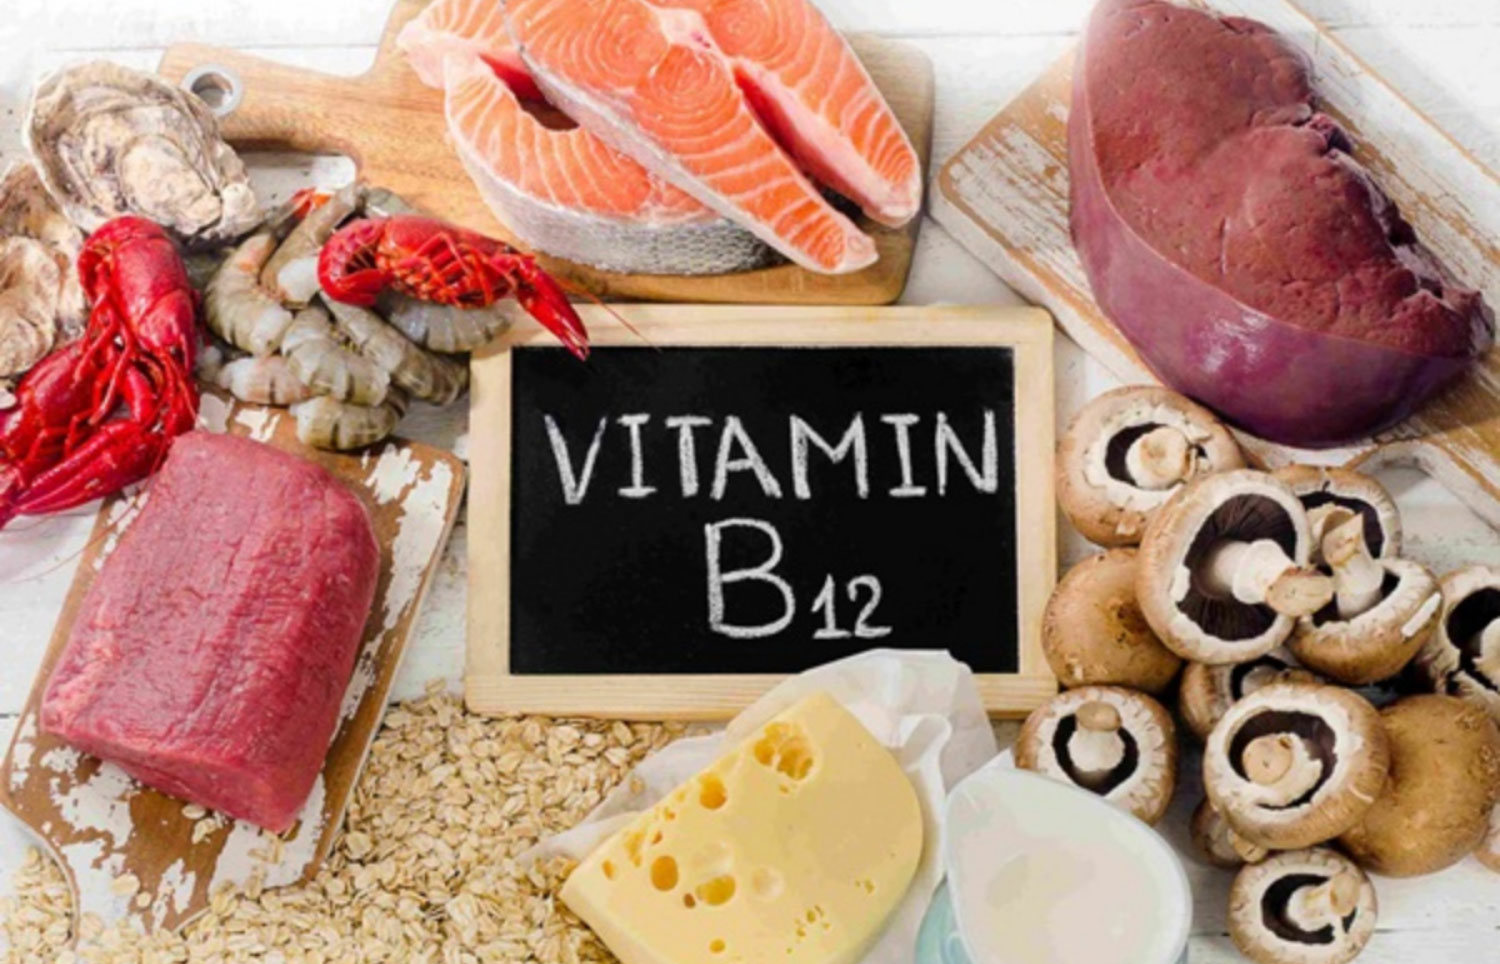 Giới thiệu về vitamin B12